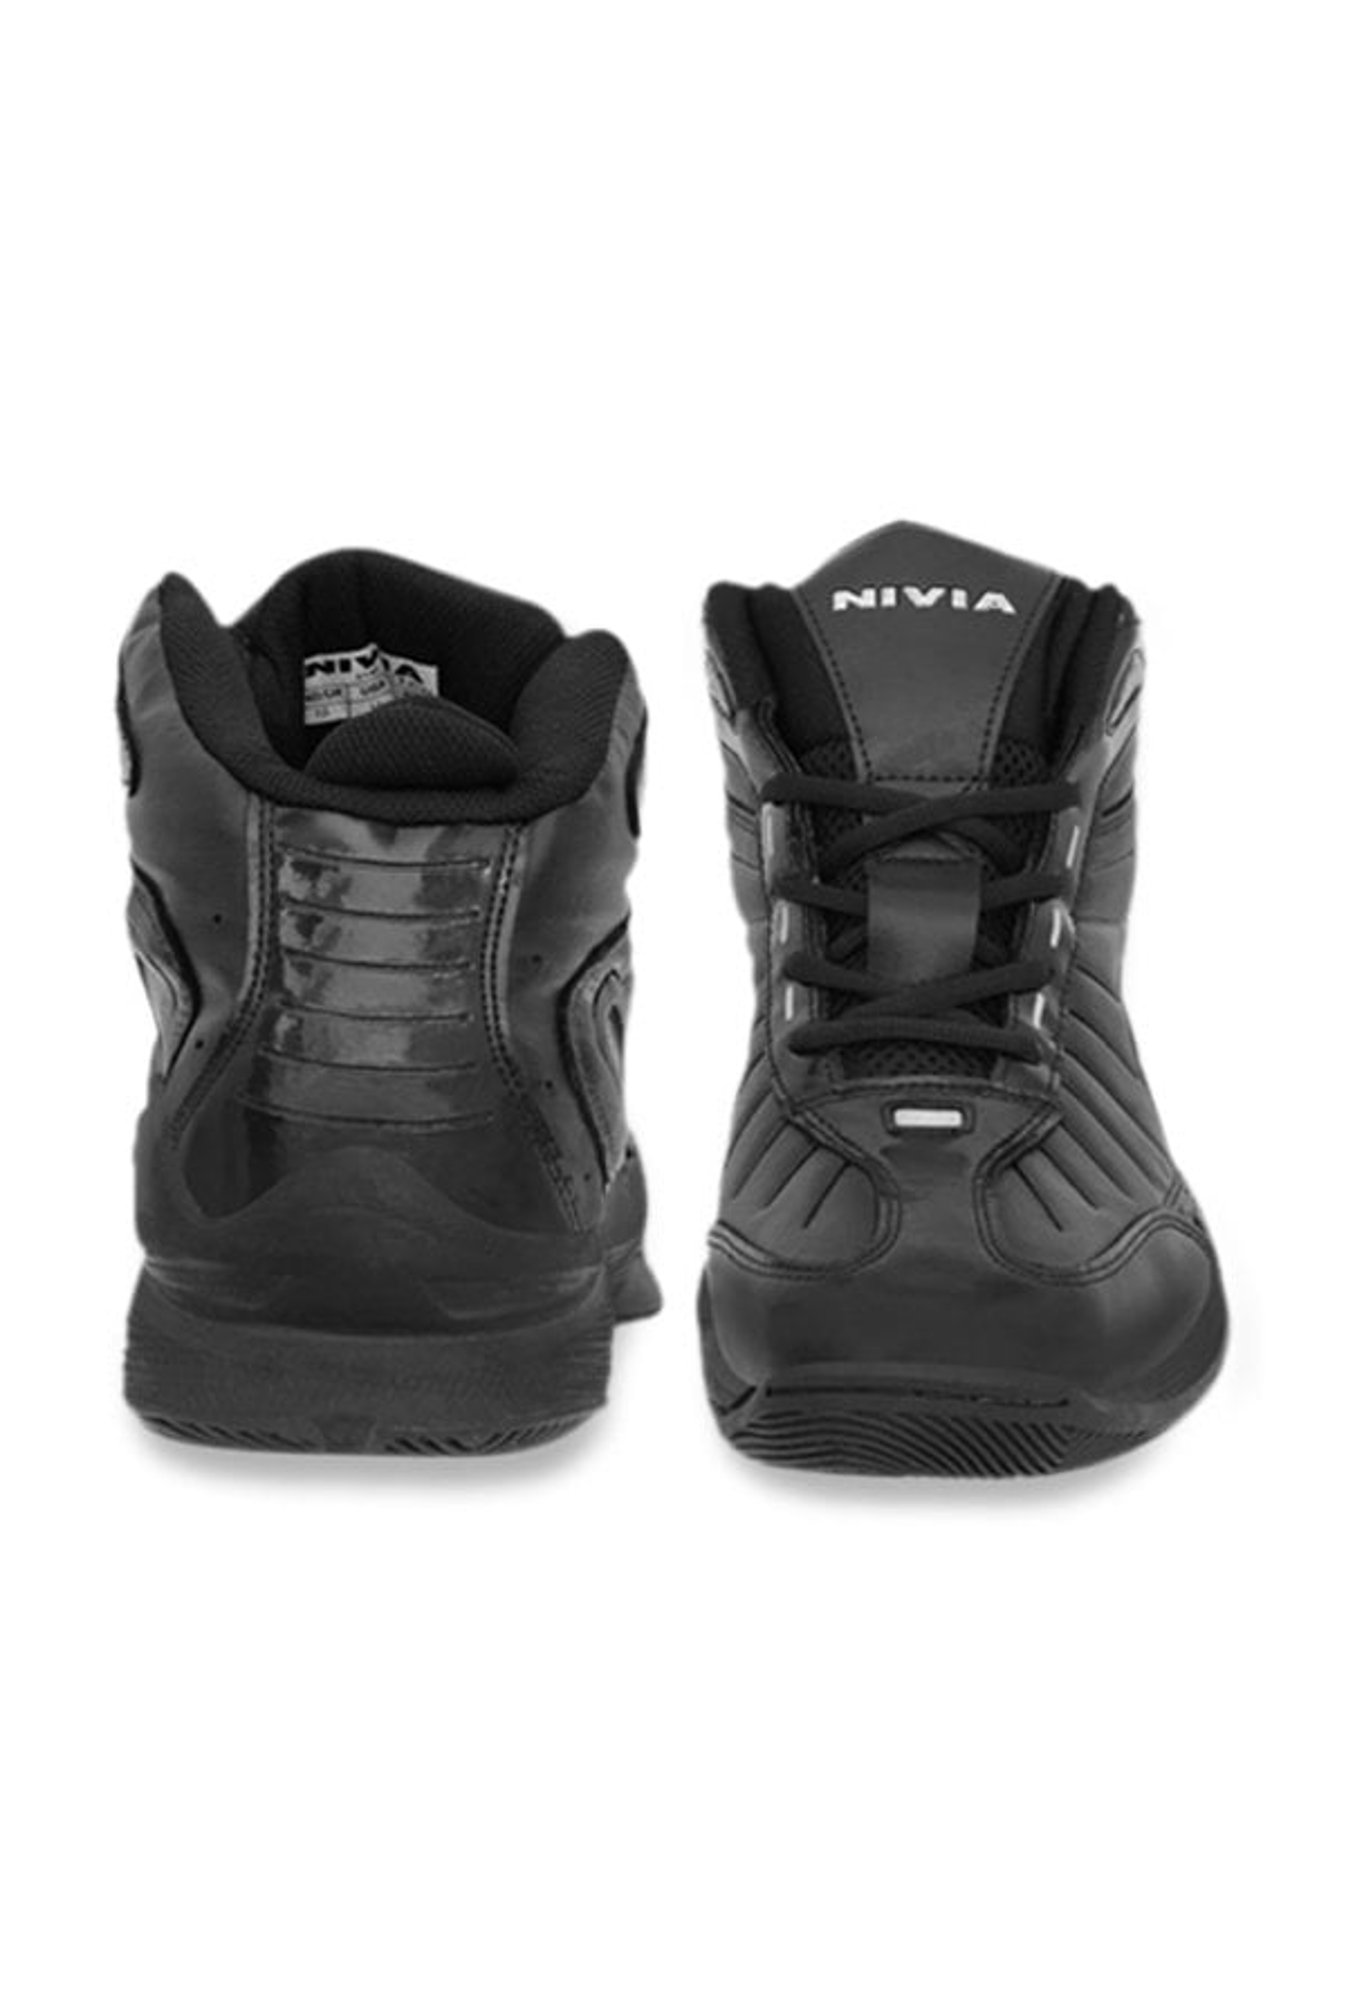 Nivia Combat 1 Black Basketball Shoes 